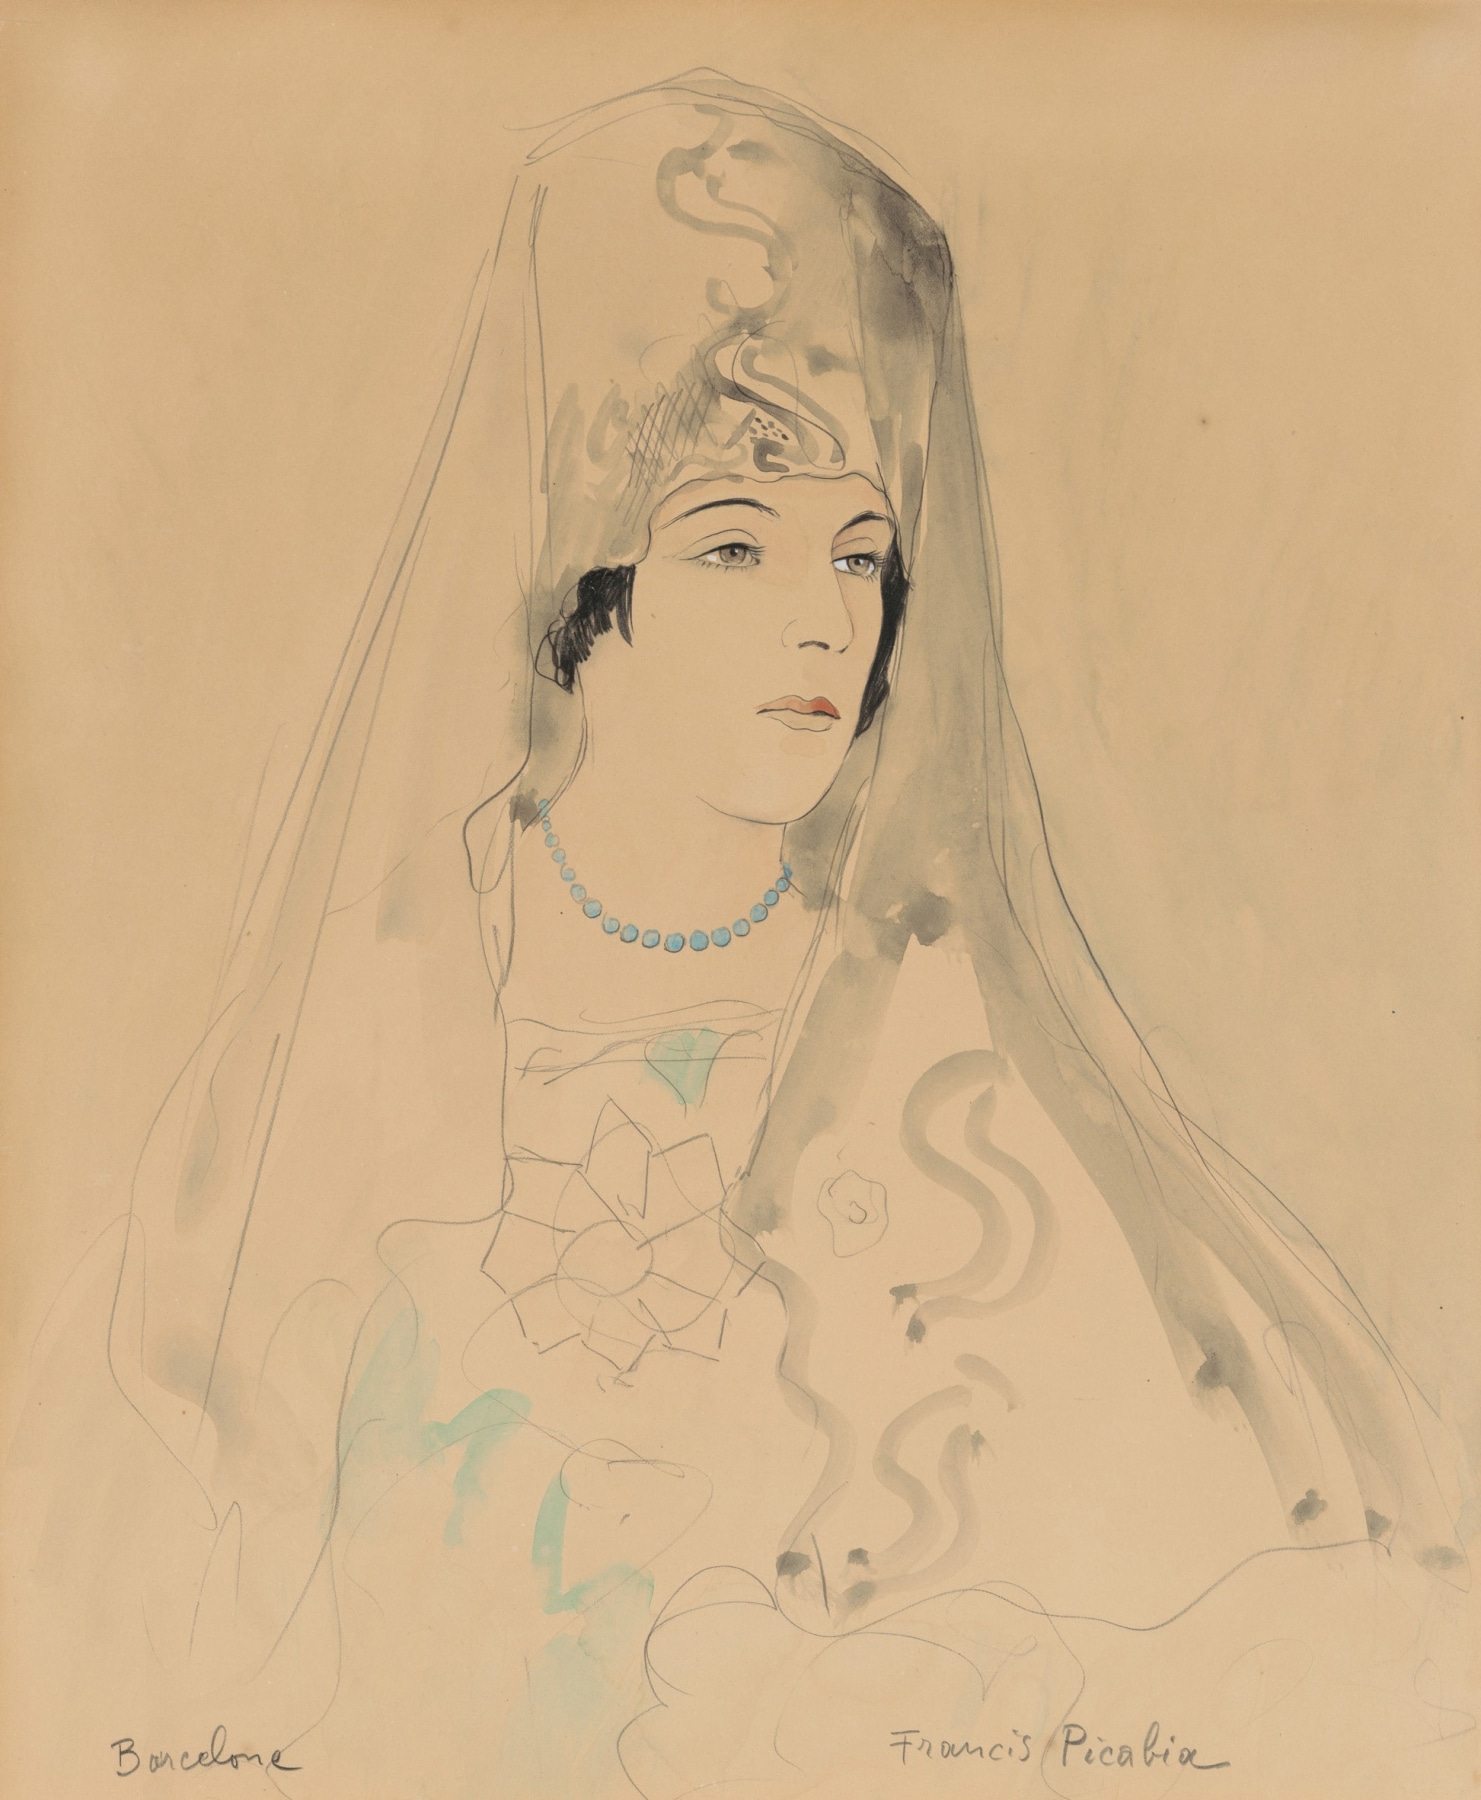 Francis Picabia

&amp;ldquo;Espagnole&amp;rdquo;, ca. 1924&amp;ndash;1927

Watercolour, ink, pencil on paper

15 1/2 x 12 1/2 inches

39.5 x 32 cm

PIZ 116
SOLD

&amp;nbsp;